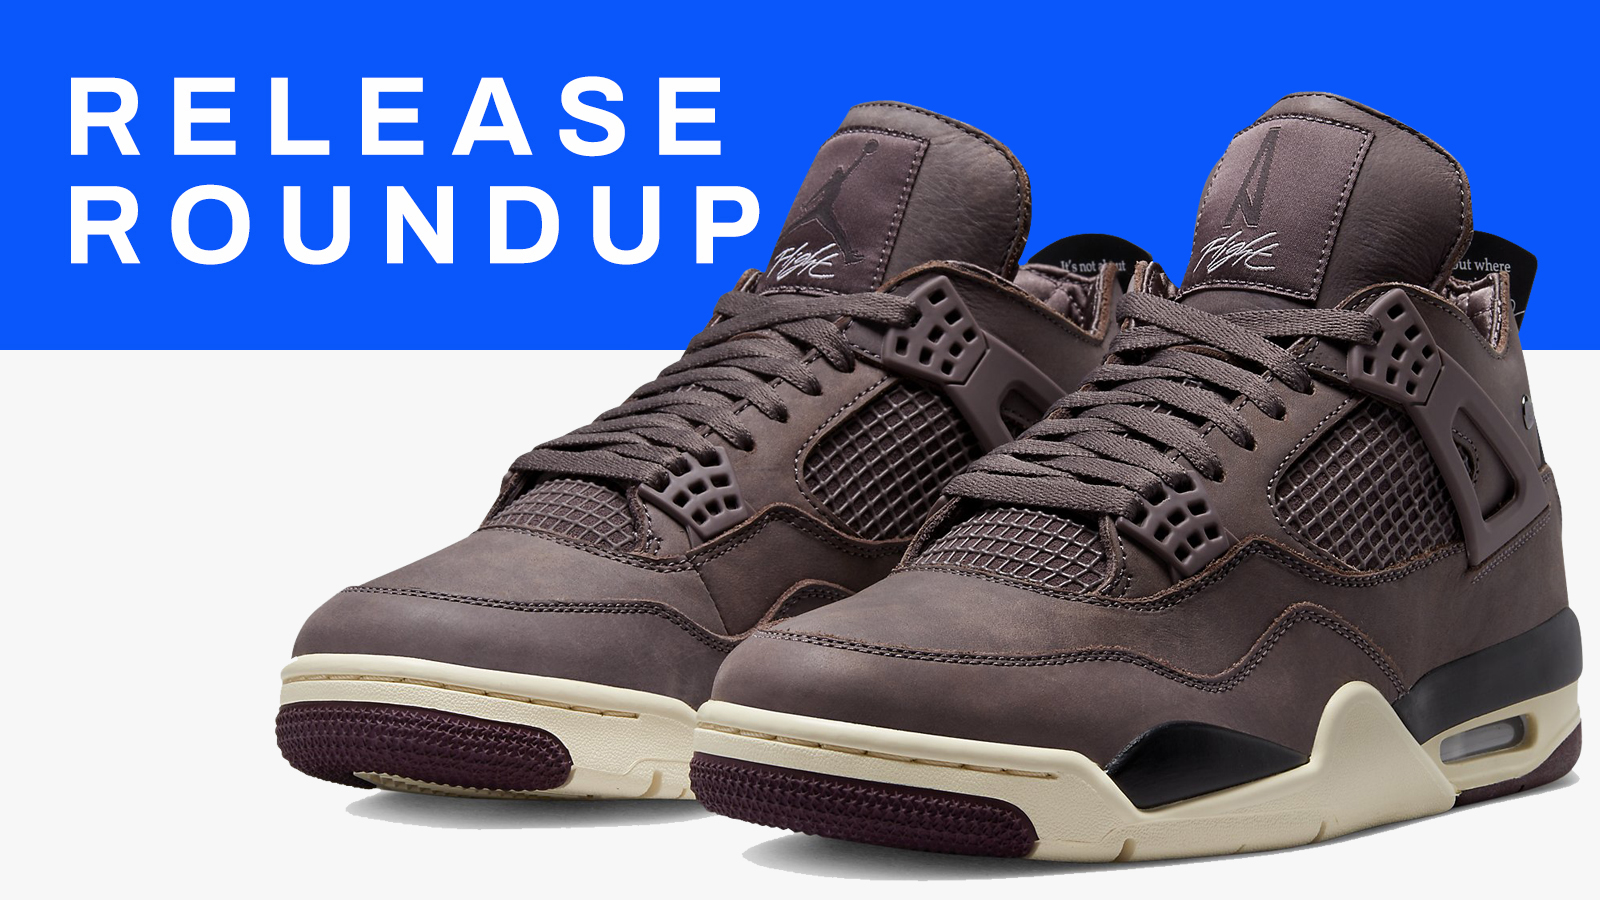 Sneaker Release Guide: A Ma Maniere x Jordan 4, JJJJound x Balance | Sole Collector